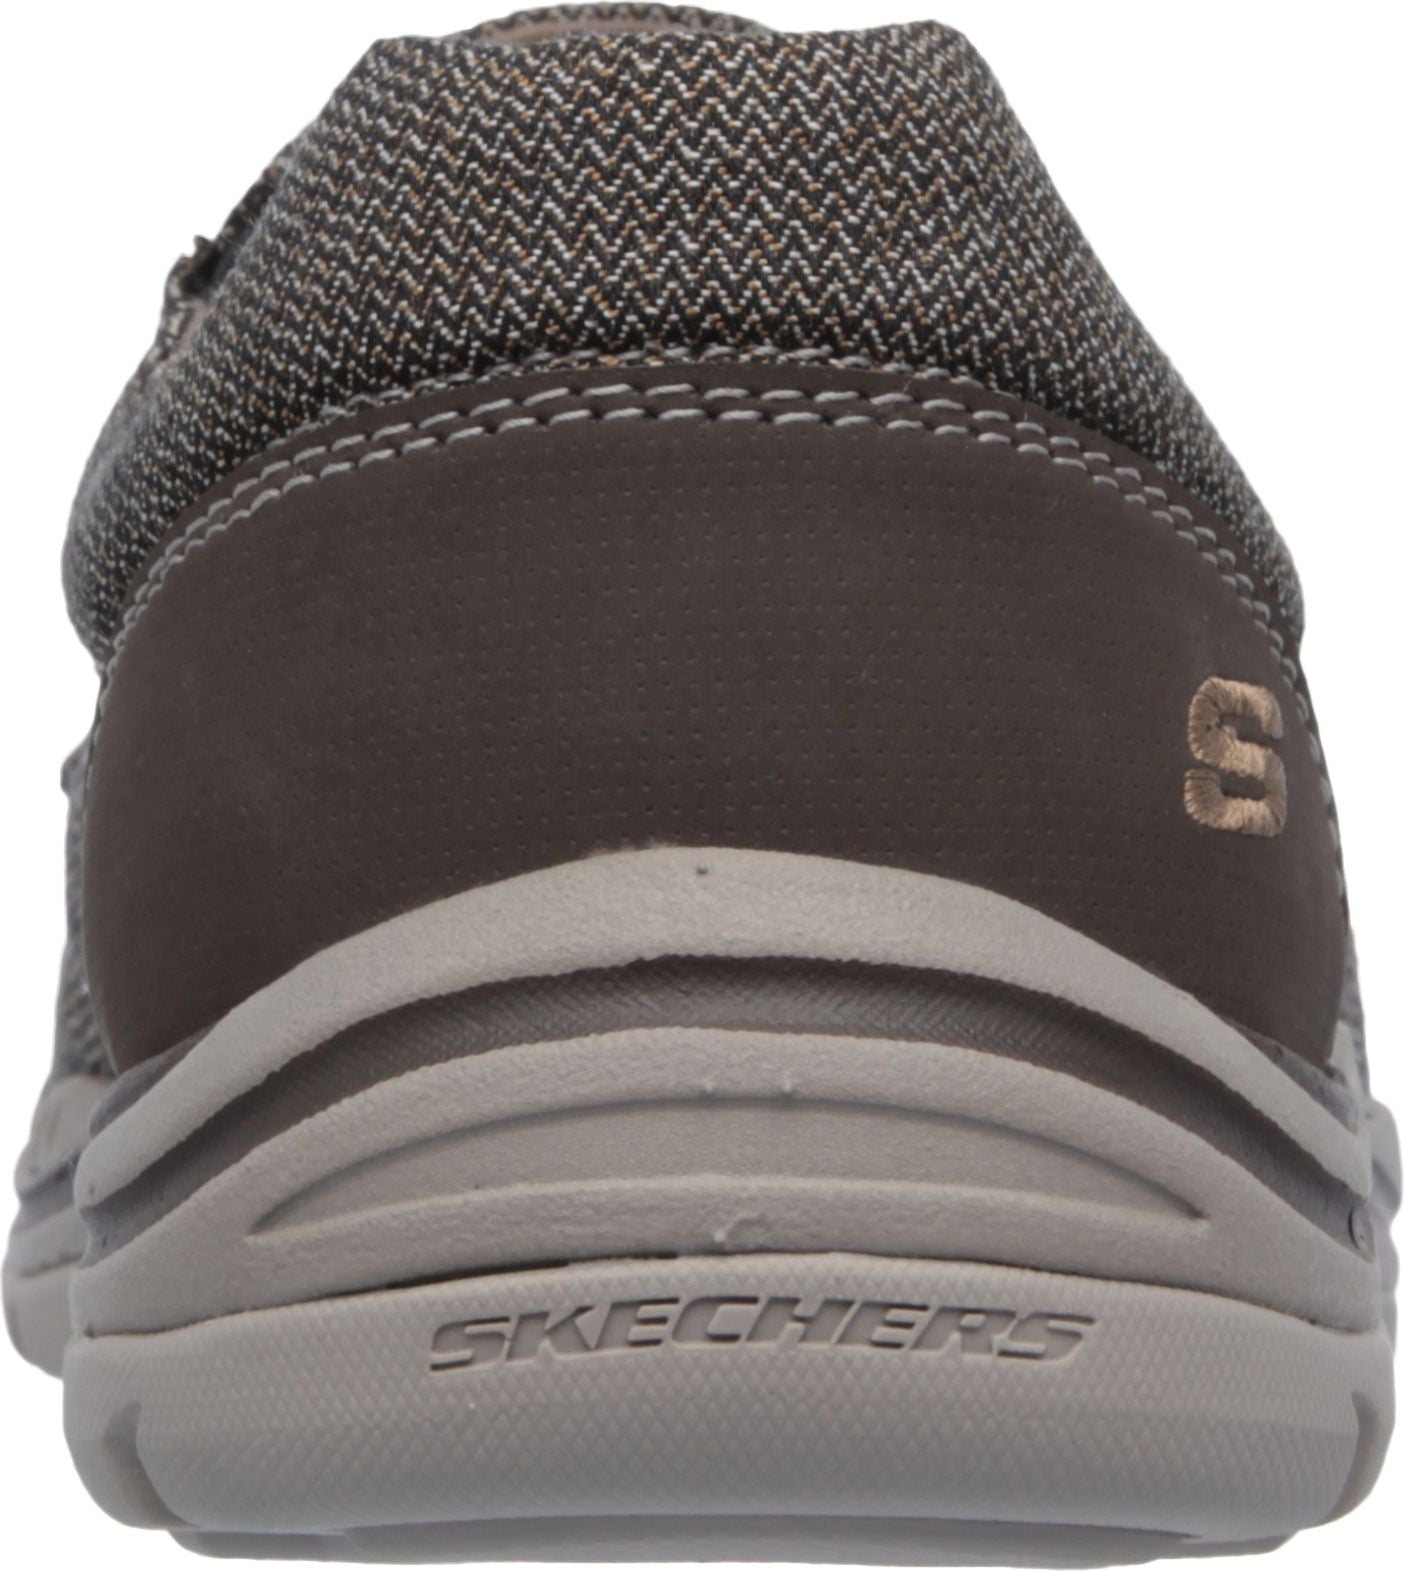 Skechers Shoes Expected Avillo Dark Brown